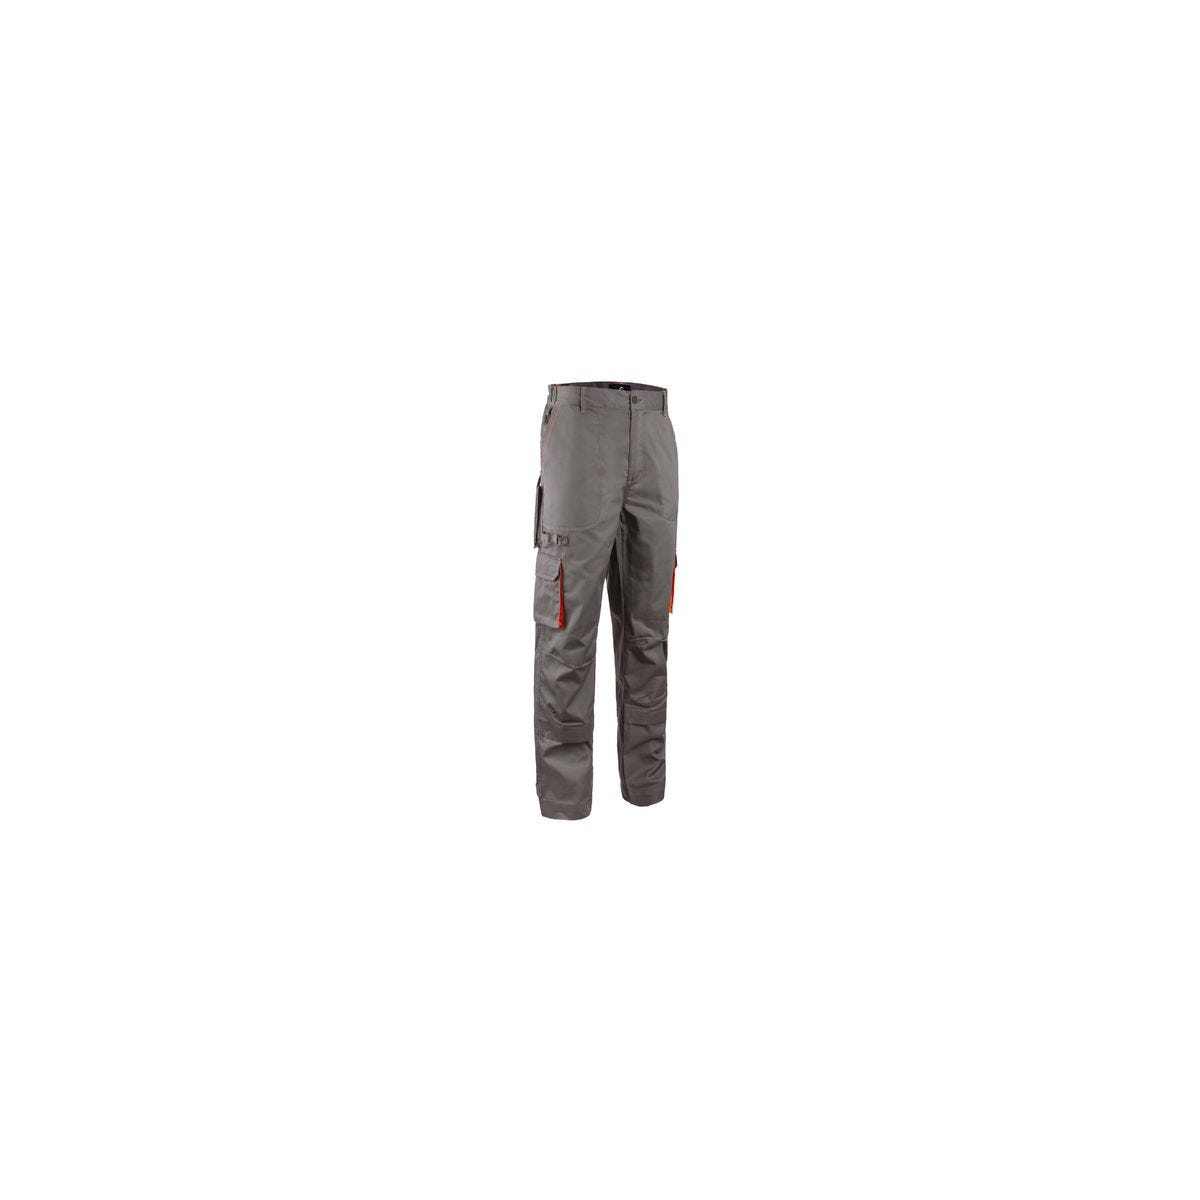 Pantalon PADDOCK II gris/orange - COVERGUARD - Taille M 0